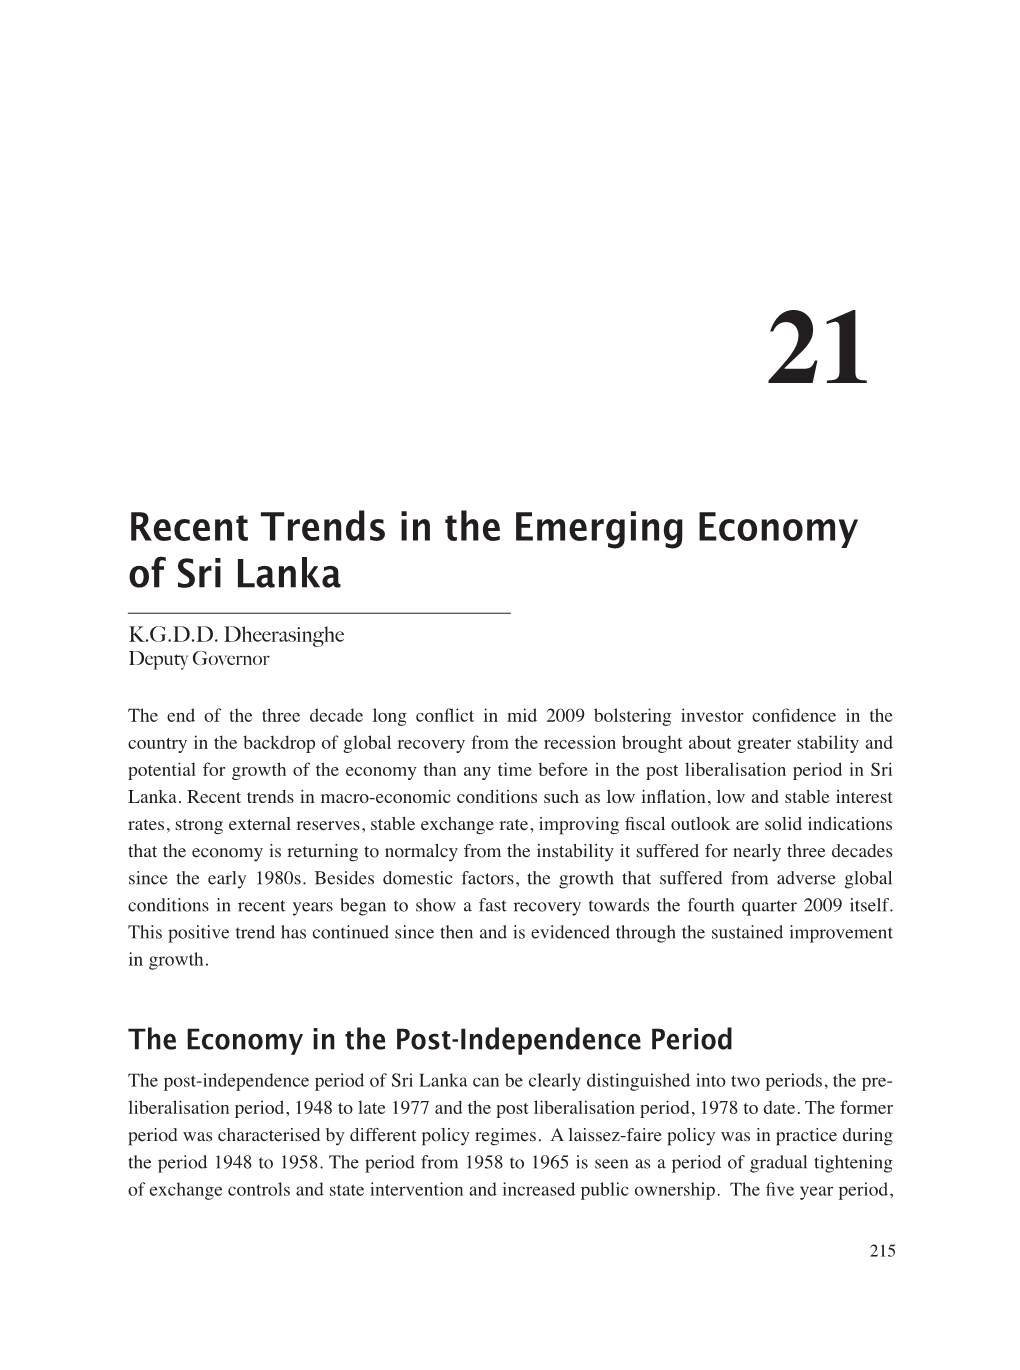 Recent Trends in the Emerging Economy of Sri Lanka